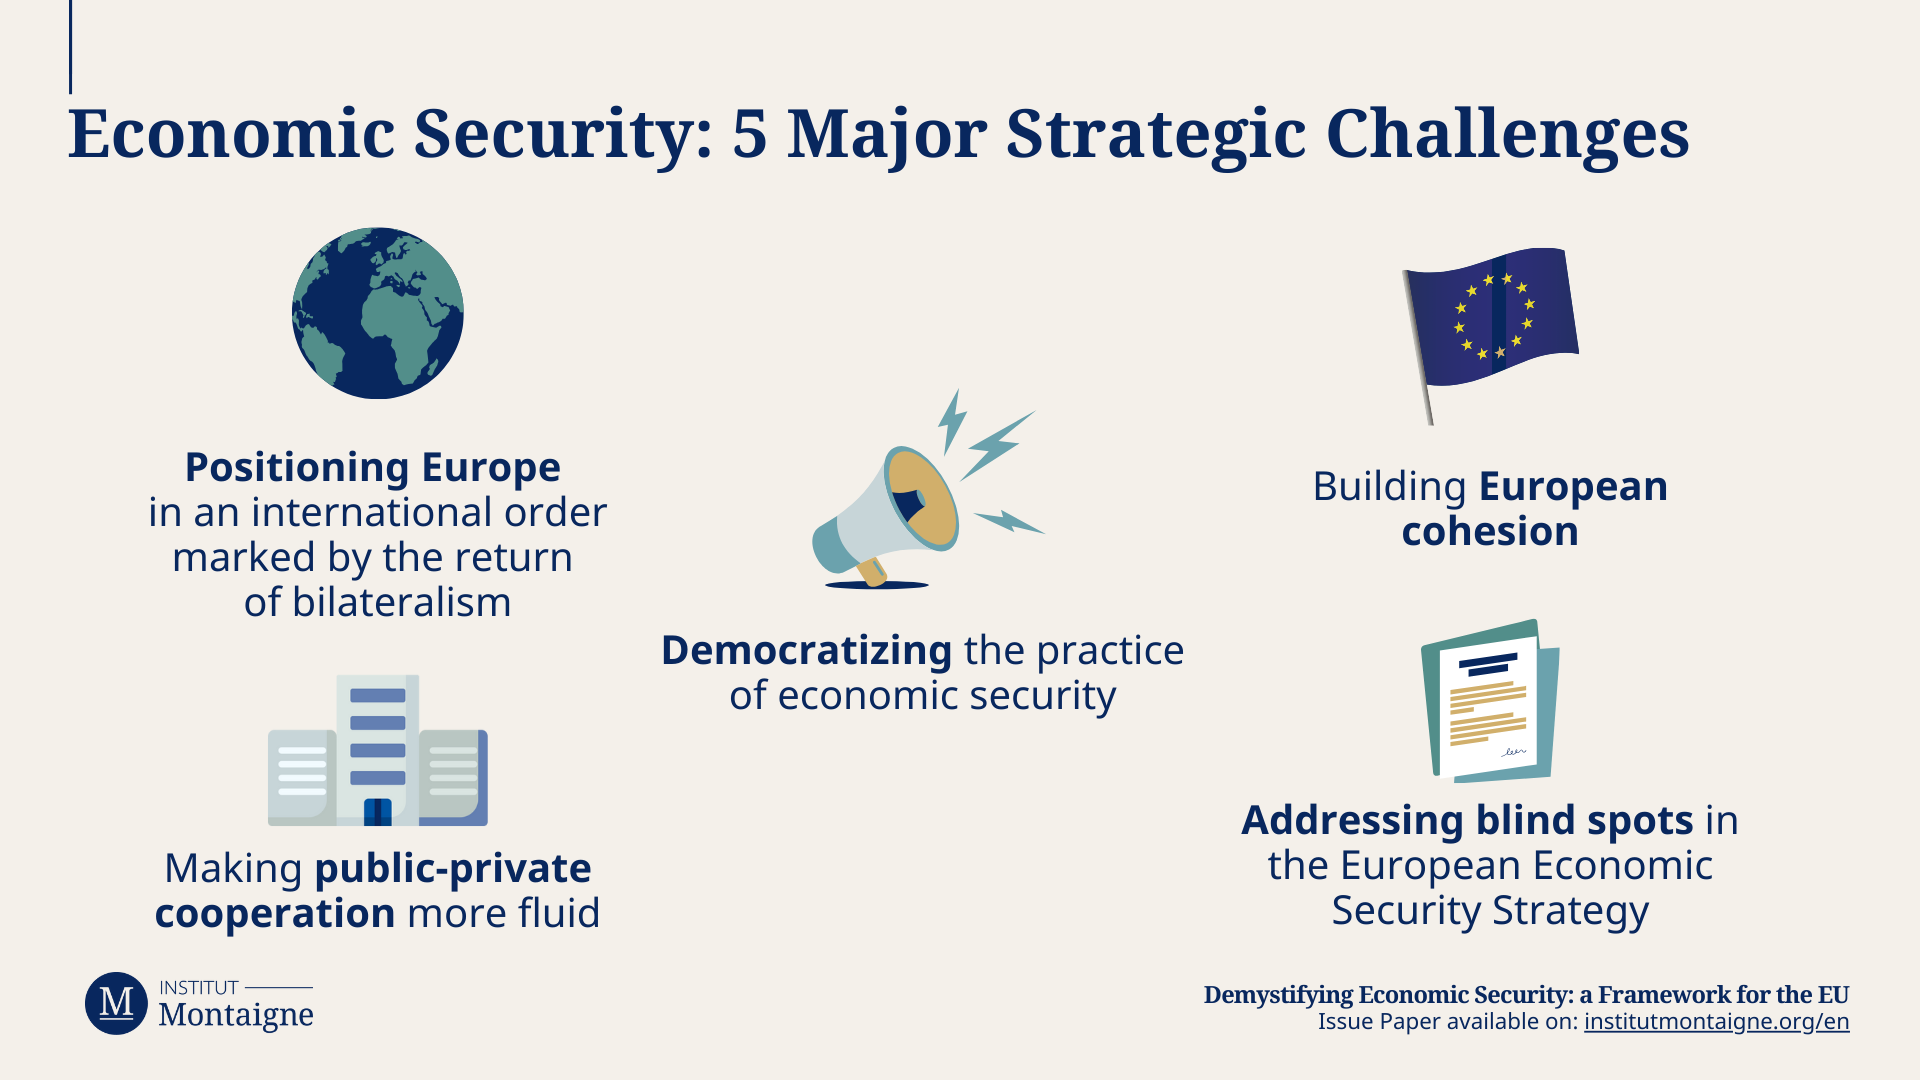 Demystifying Economic Security:  a Framework for the EU